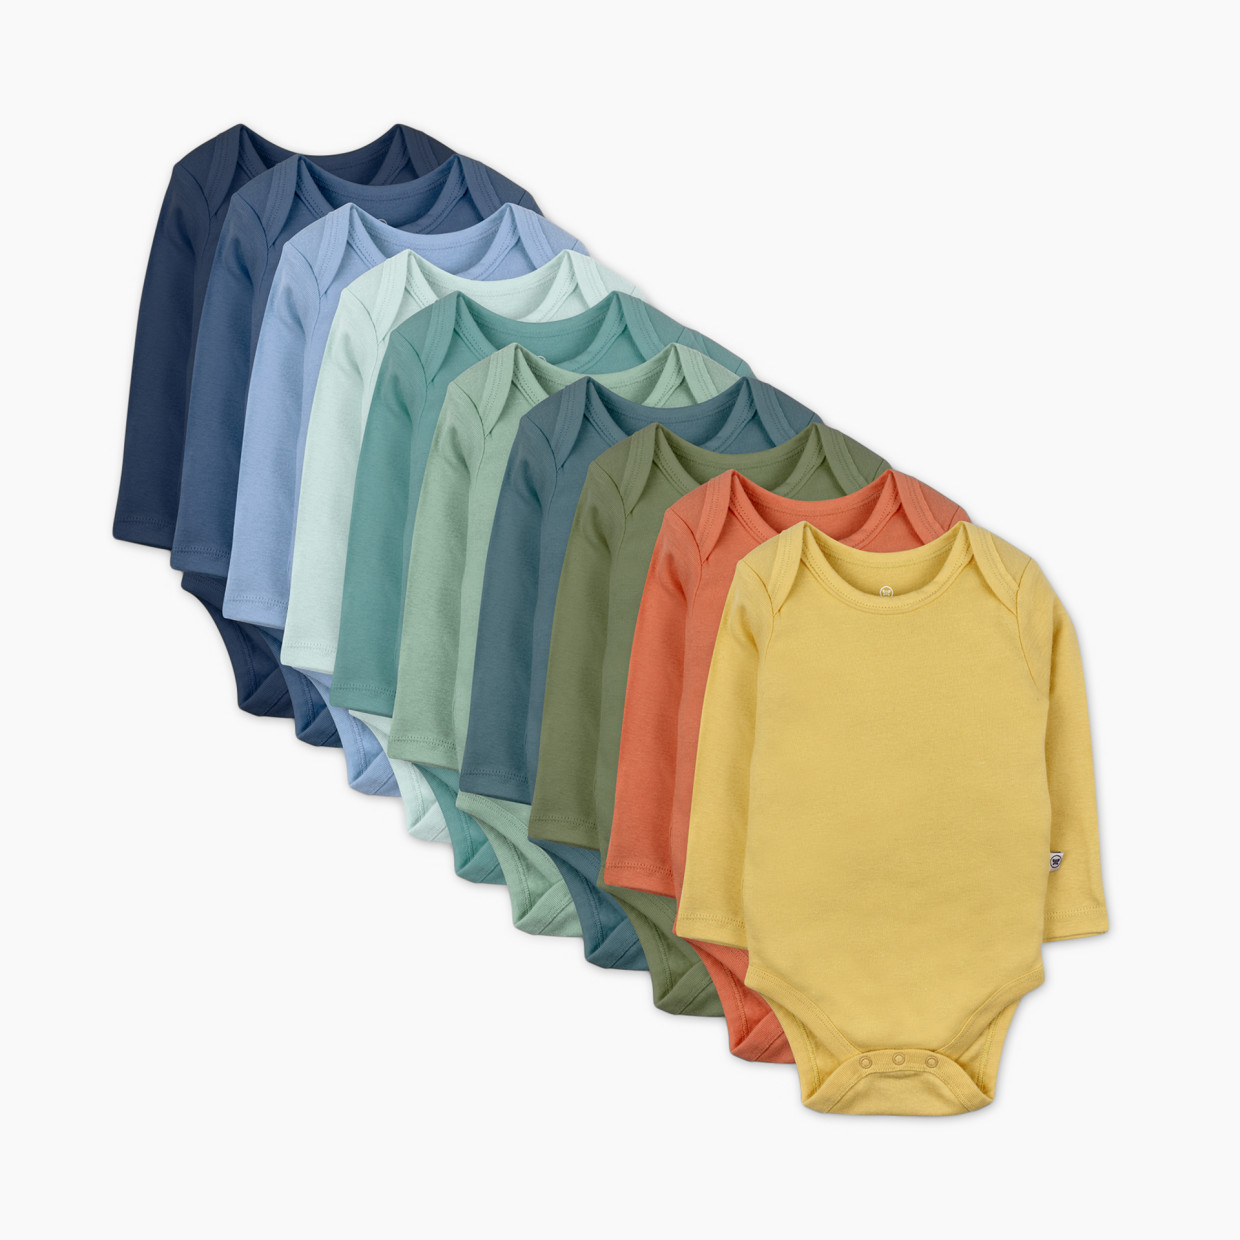 Honest Baby Clothing 10-Pack Organic Cotton Long Sleeve Bodysuits - Rainbow Gem Blues, 3-6 M, 10.